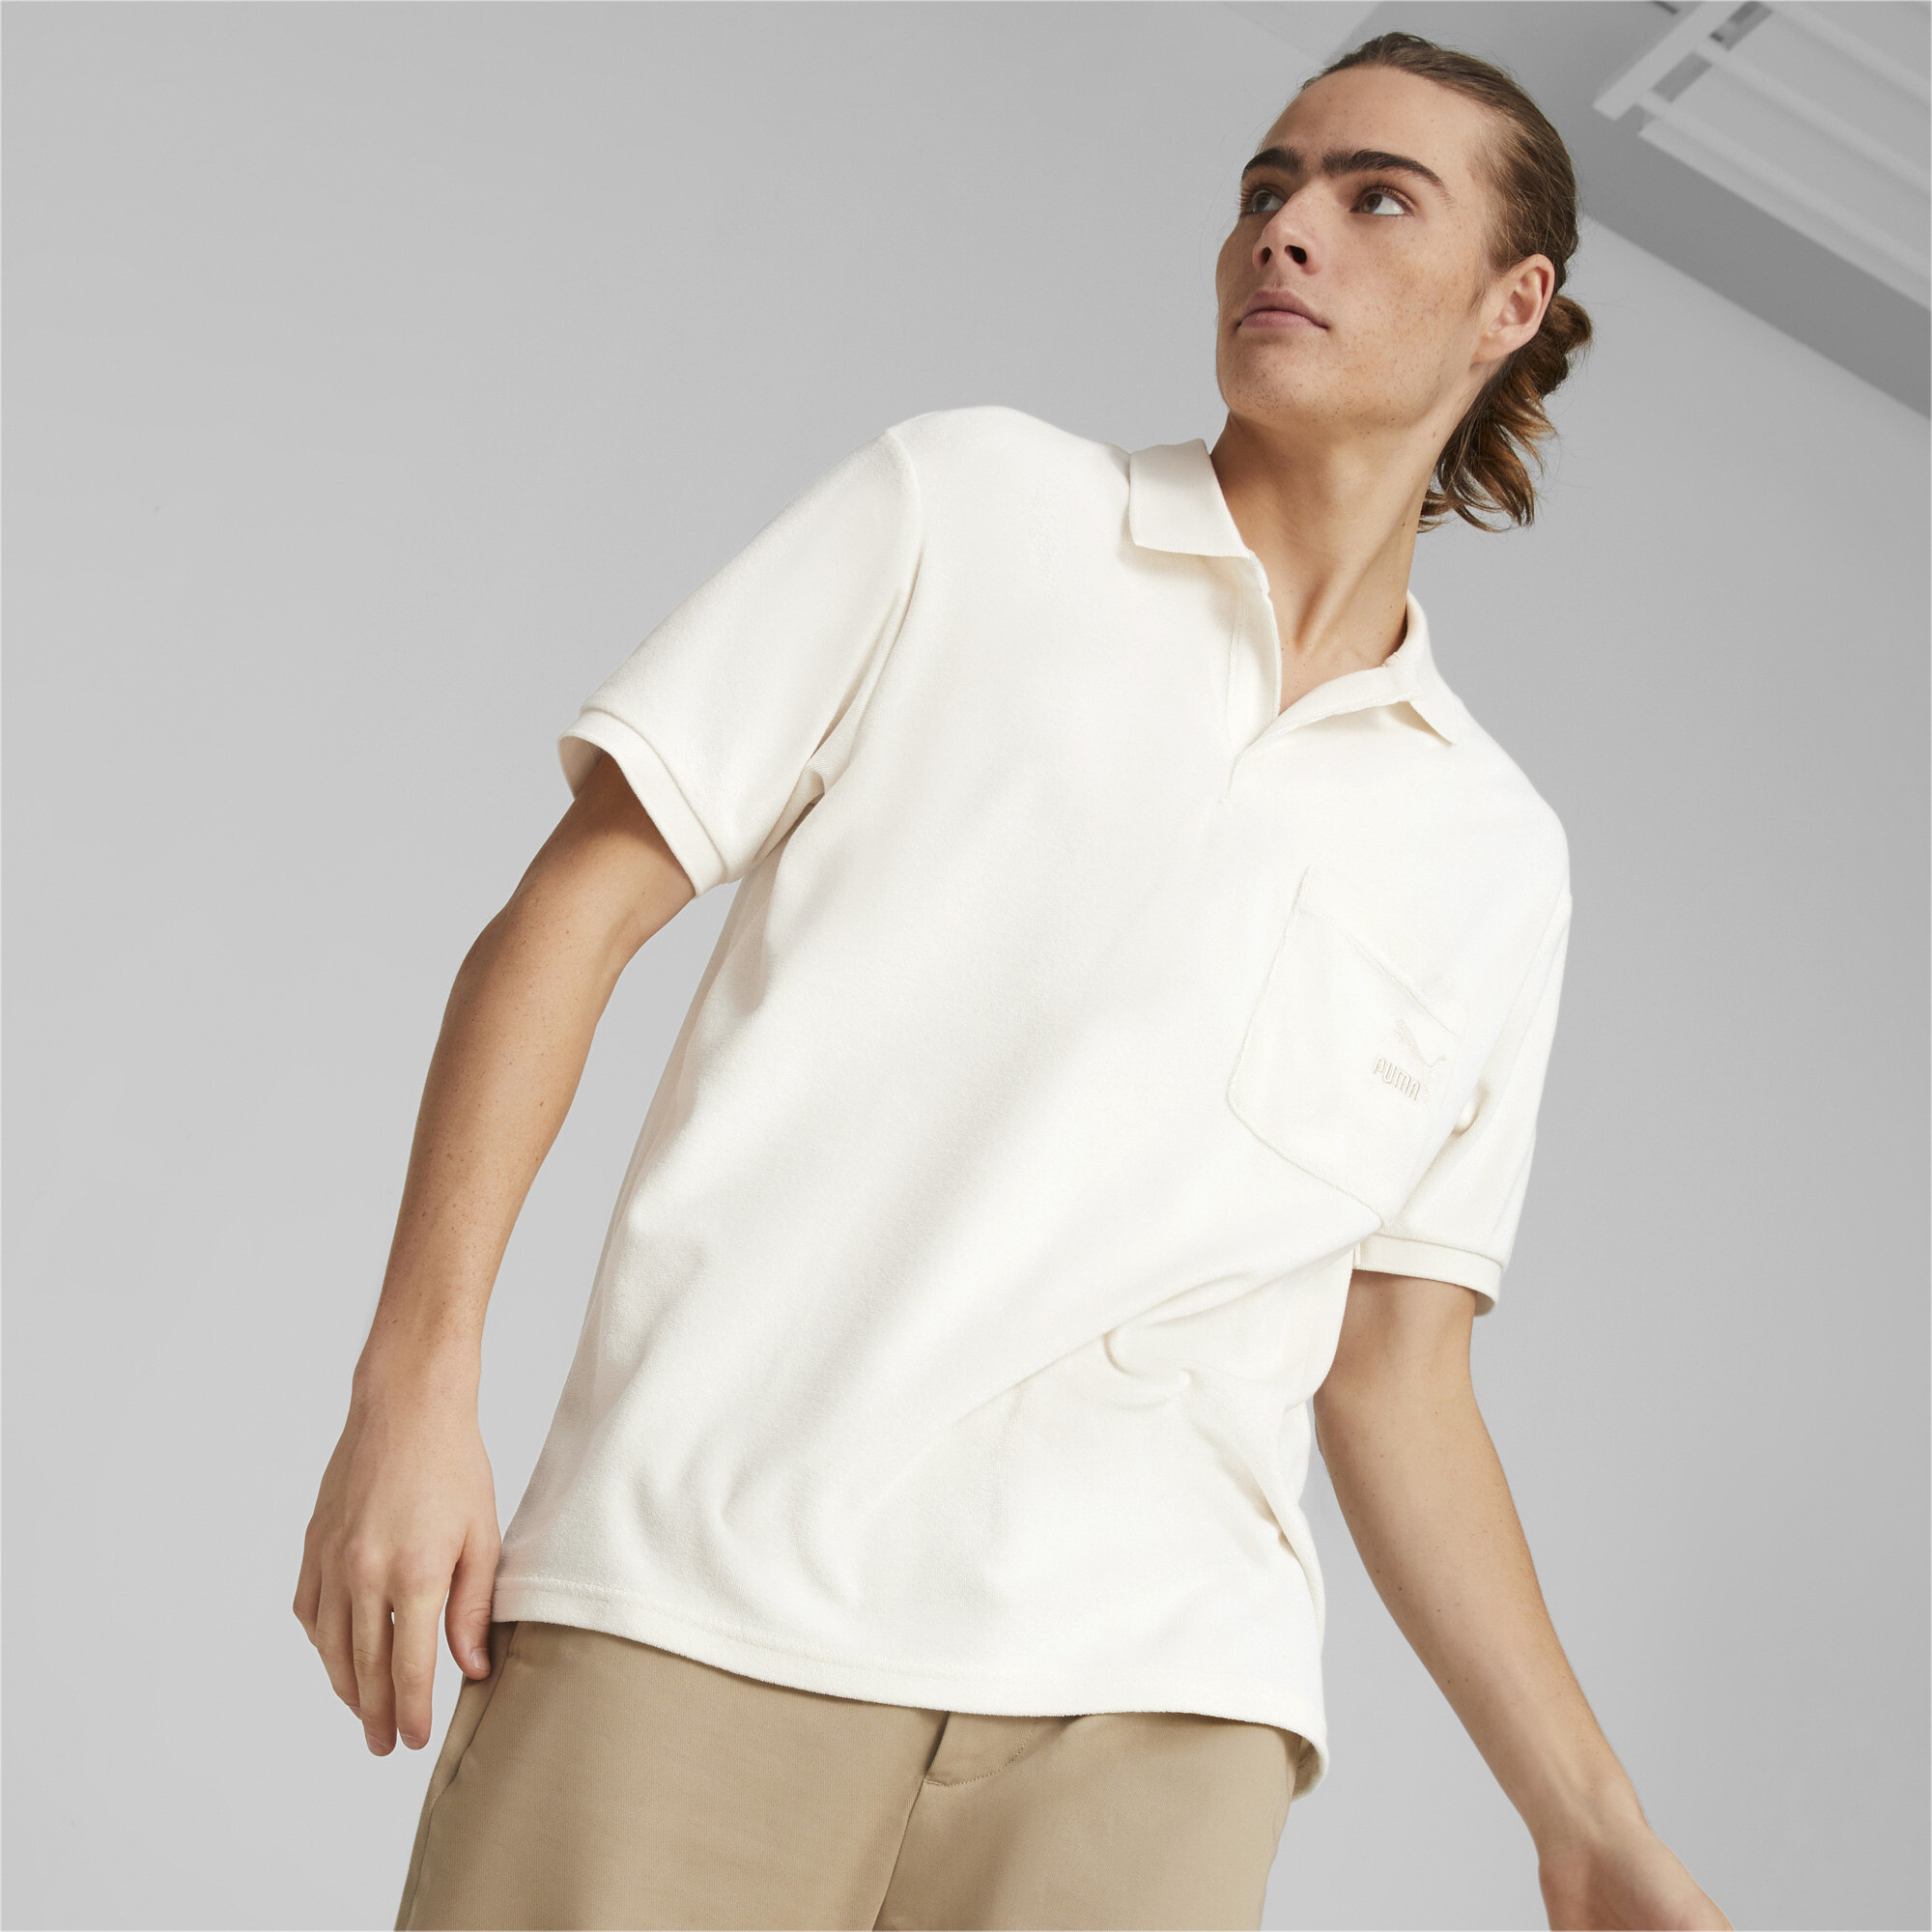 Men's Puma Classics Towelling Polo Shirt T-Shirt, White T-Shirt, Size XXL T-Shirt, Clothing